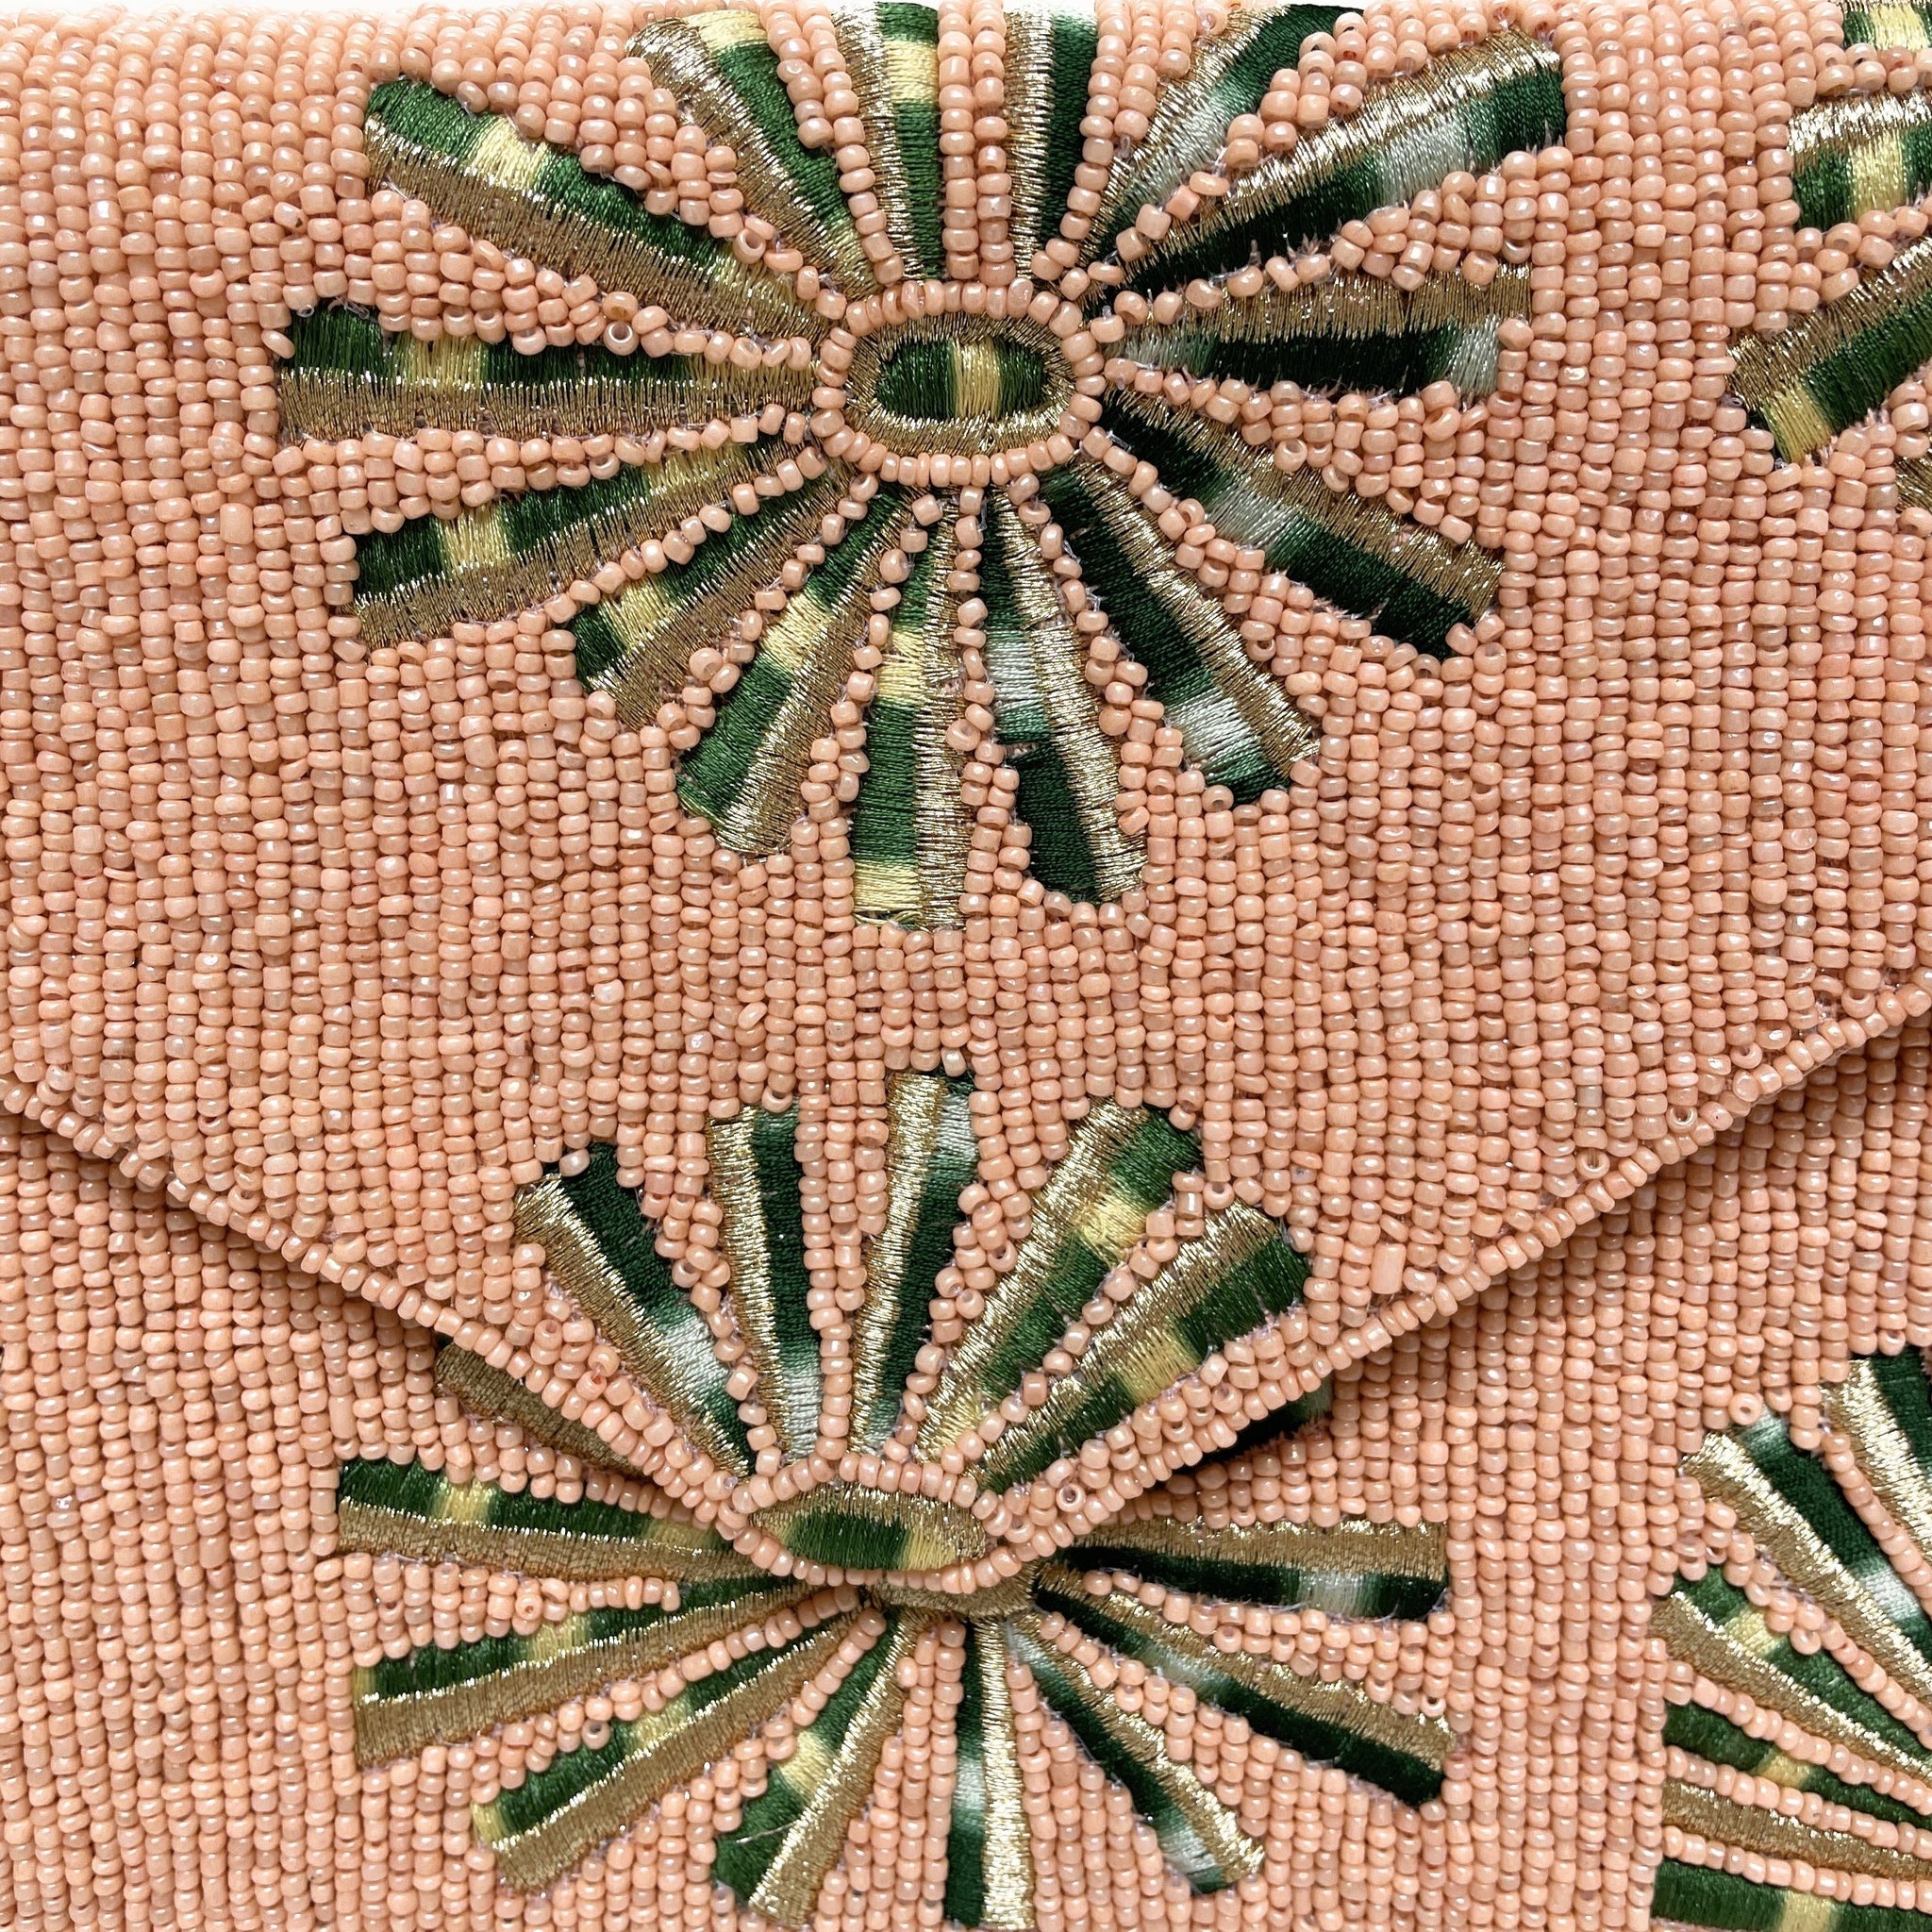 Crystal Women Evening Clutches Wedding Party Handbag Clutch Purse-Green  color | eBay